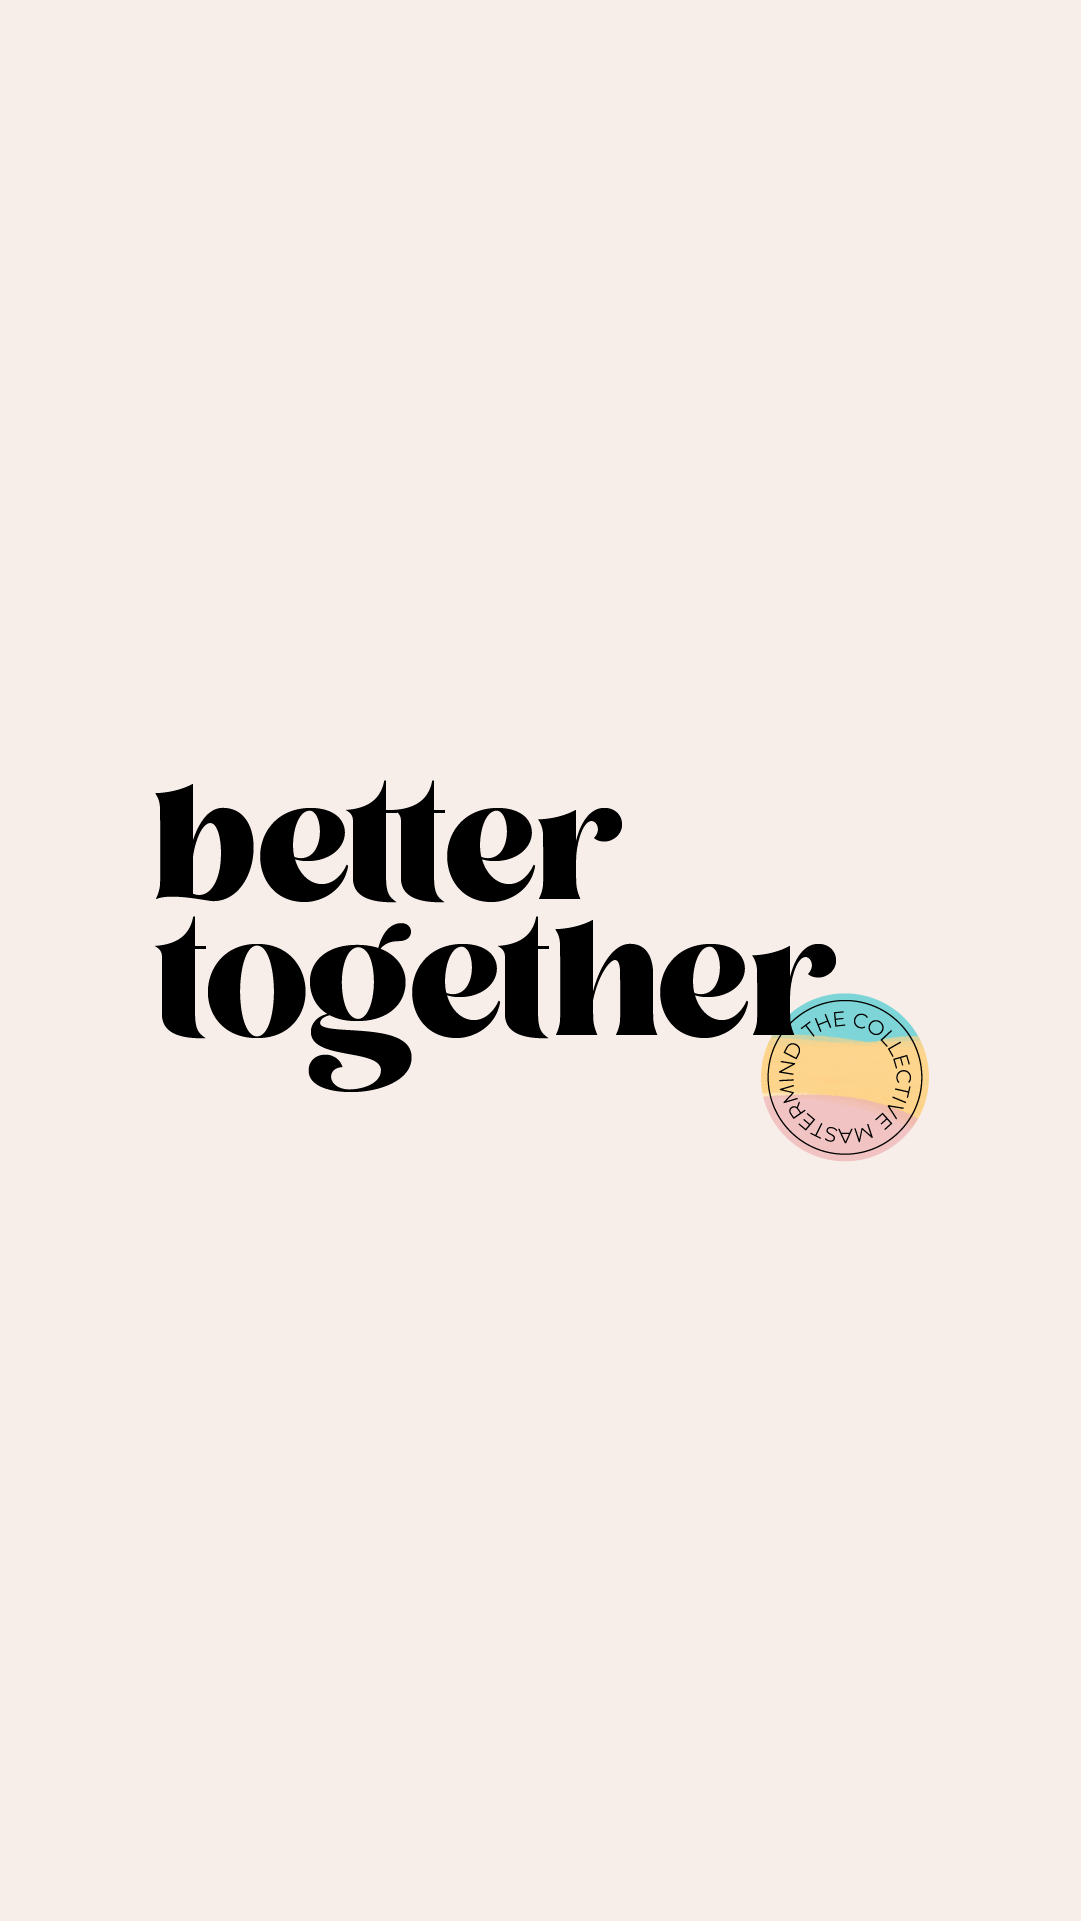 ctr_better together & mark